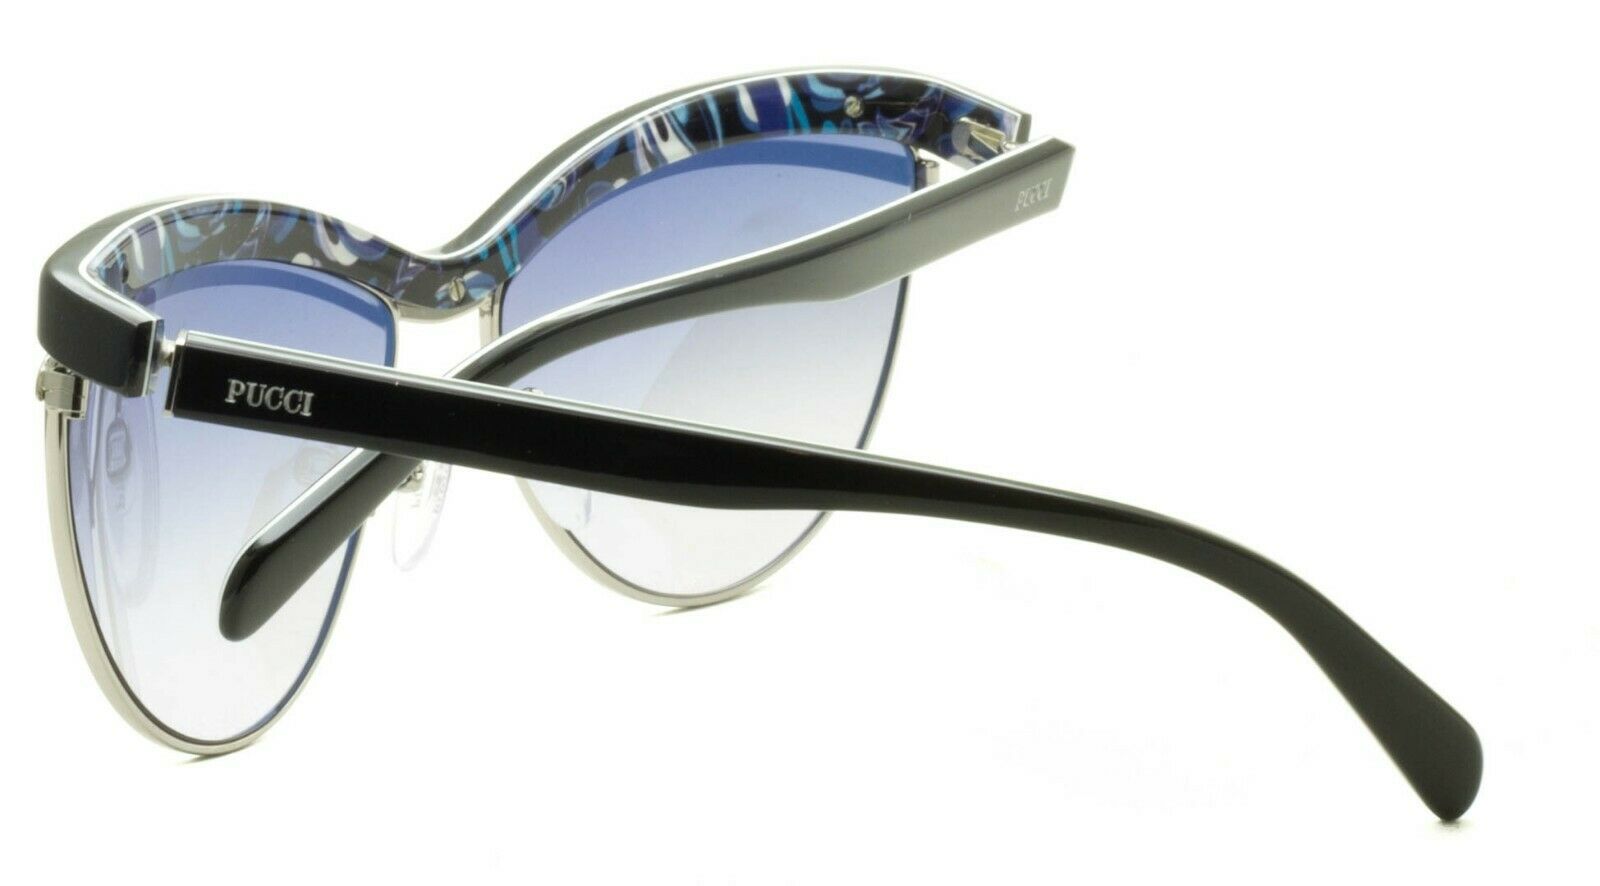 EMILIO PUCCI EP 10 05B 61mm Sunglasses Shades Eyeglasses Eyewear Italy - New